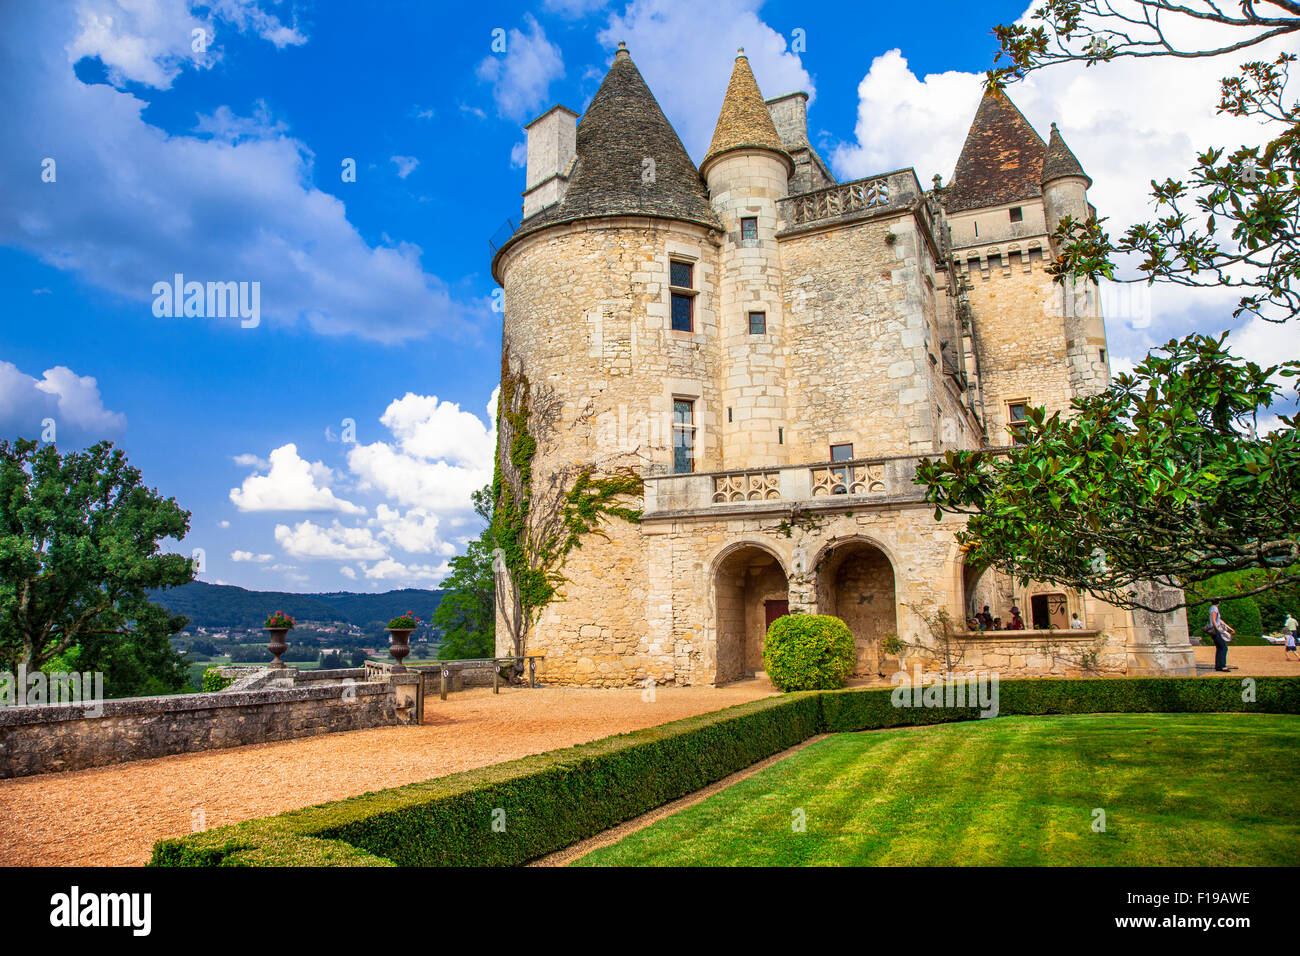 Beautiful medieval castes of France - Milandes (Dordogne) Stock Photo